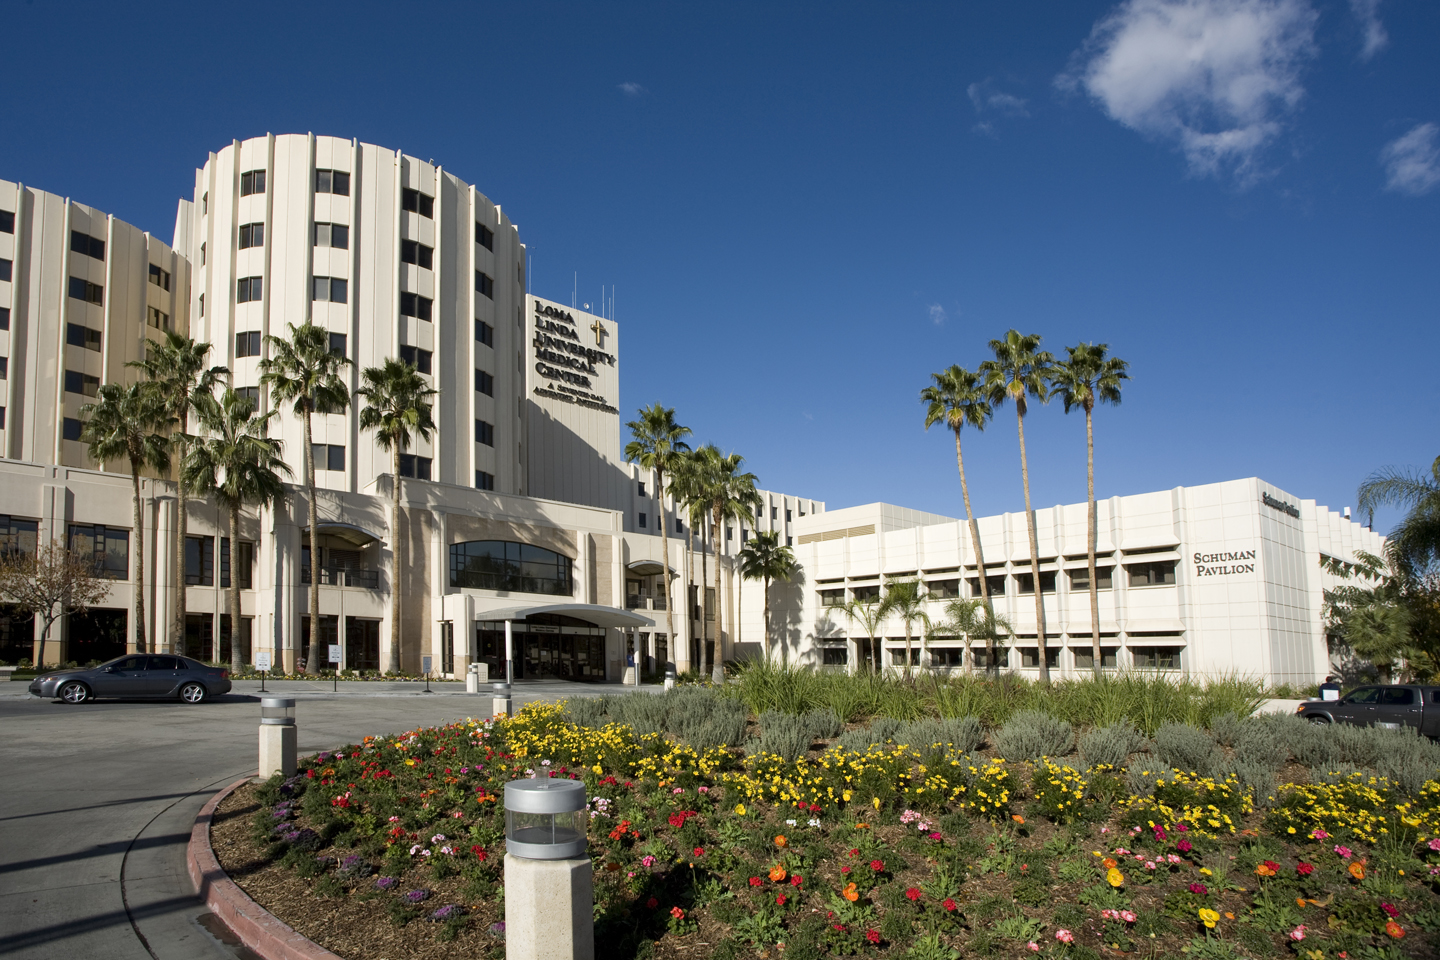 Us News And World Report Names Loma Linda University Medical Center 1 1530